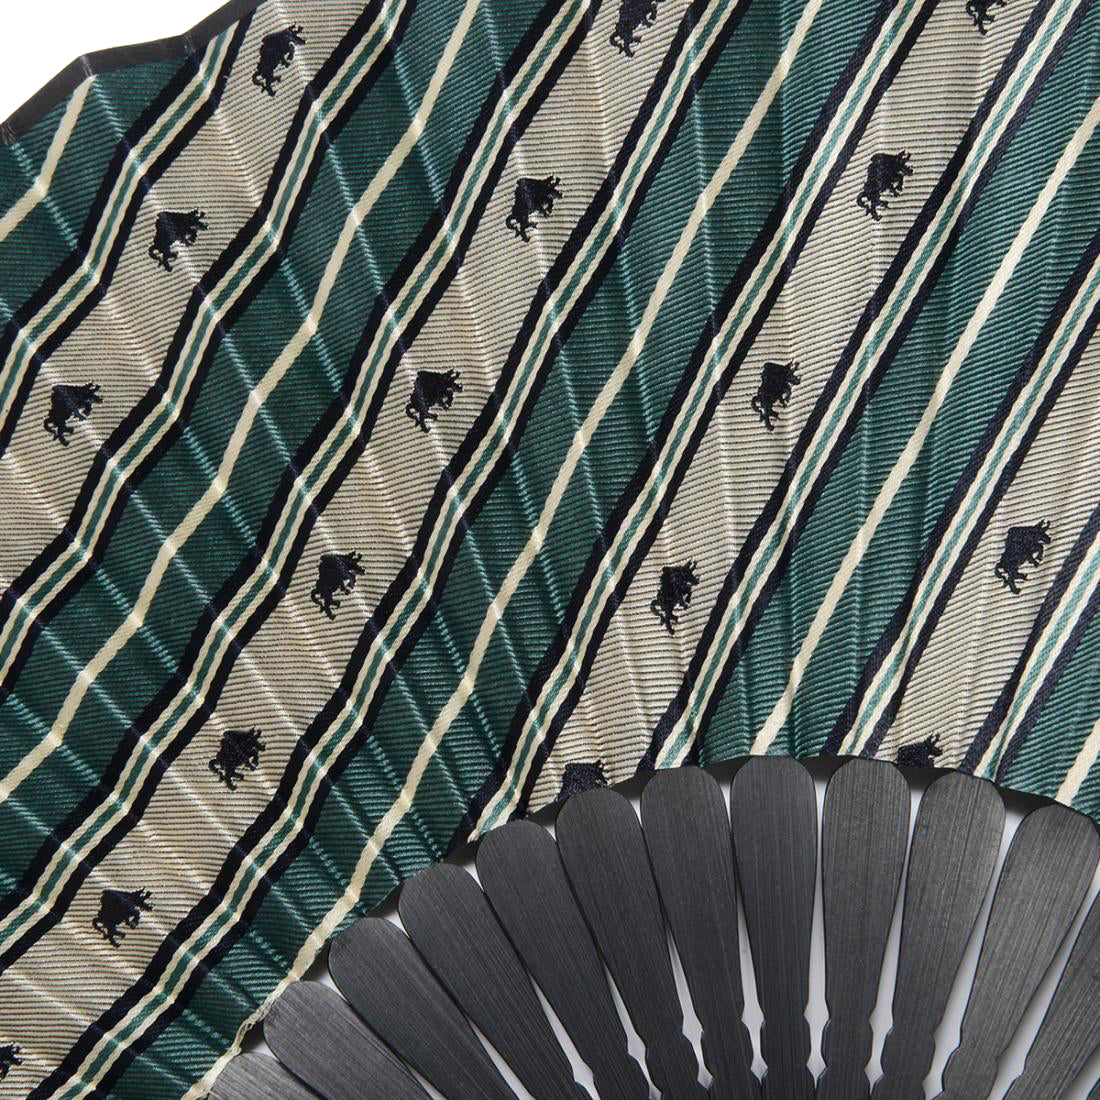 Hand Made Japanese Folding Fan -Striped Pattern Jacquard Woven Kyoto Silk & Bamboo Made in Japan FORTUNA Tokyo